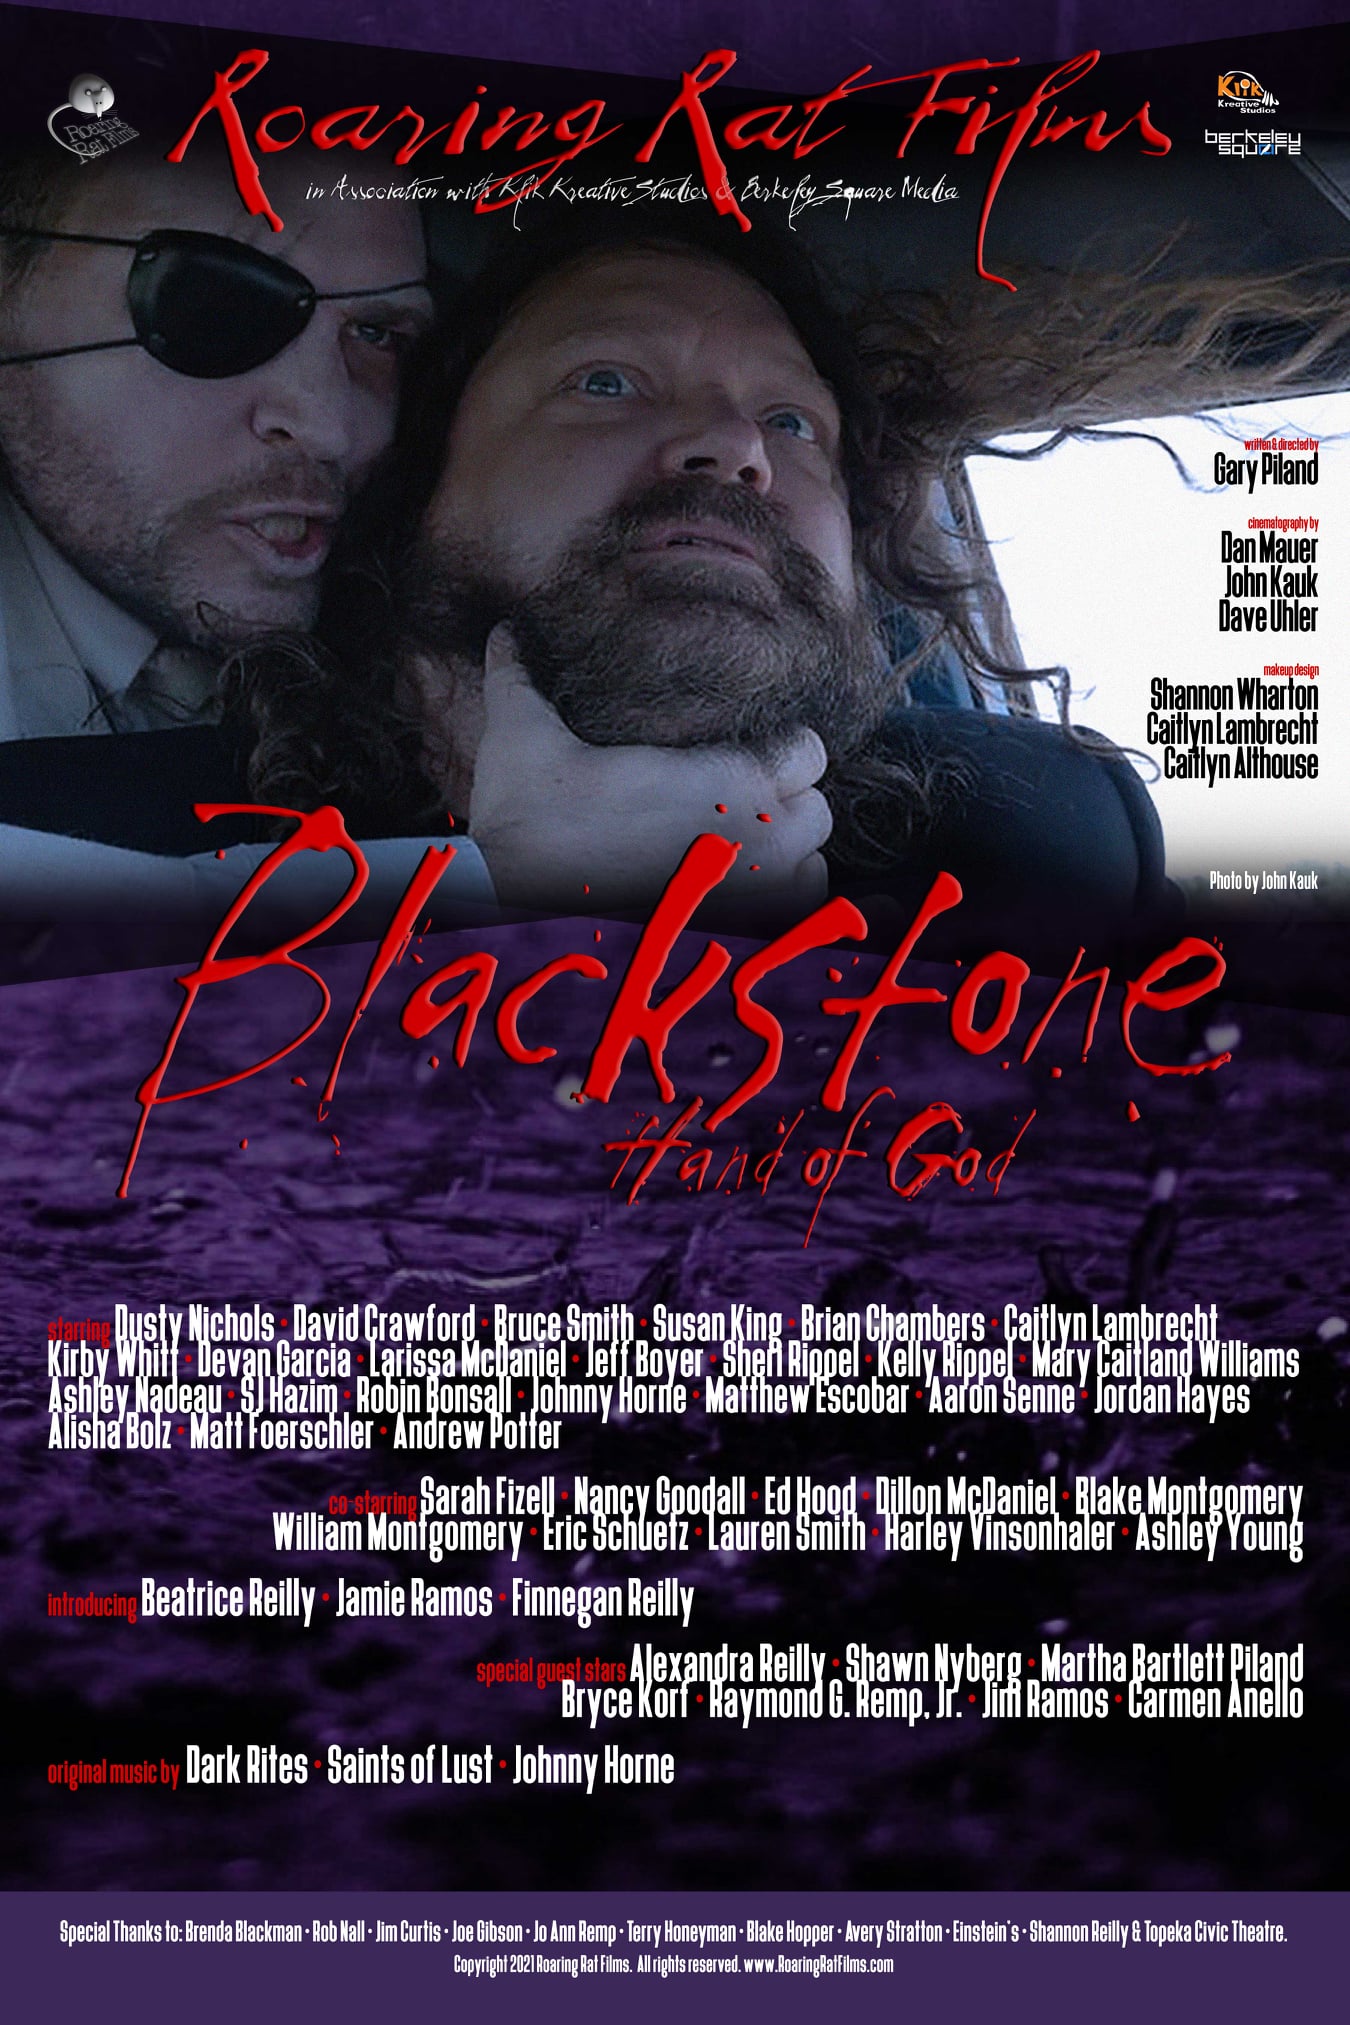 Blackstone - Hand of God